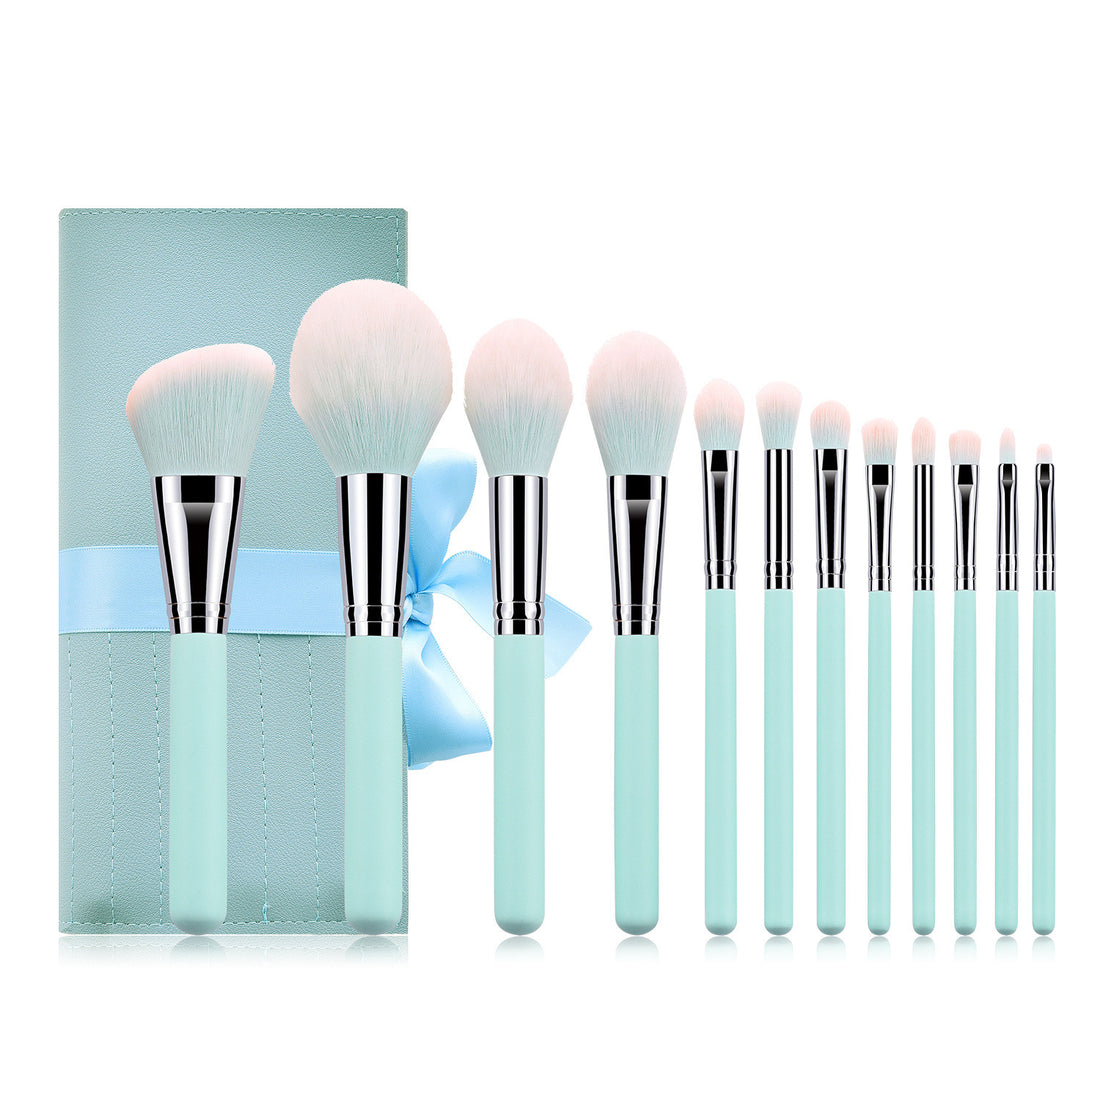 12 light blue makeup brushes